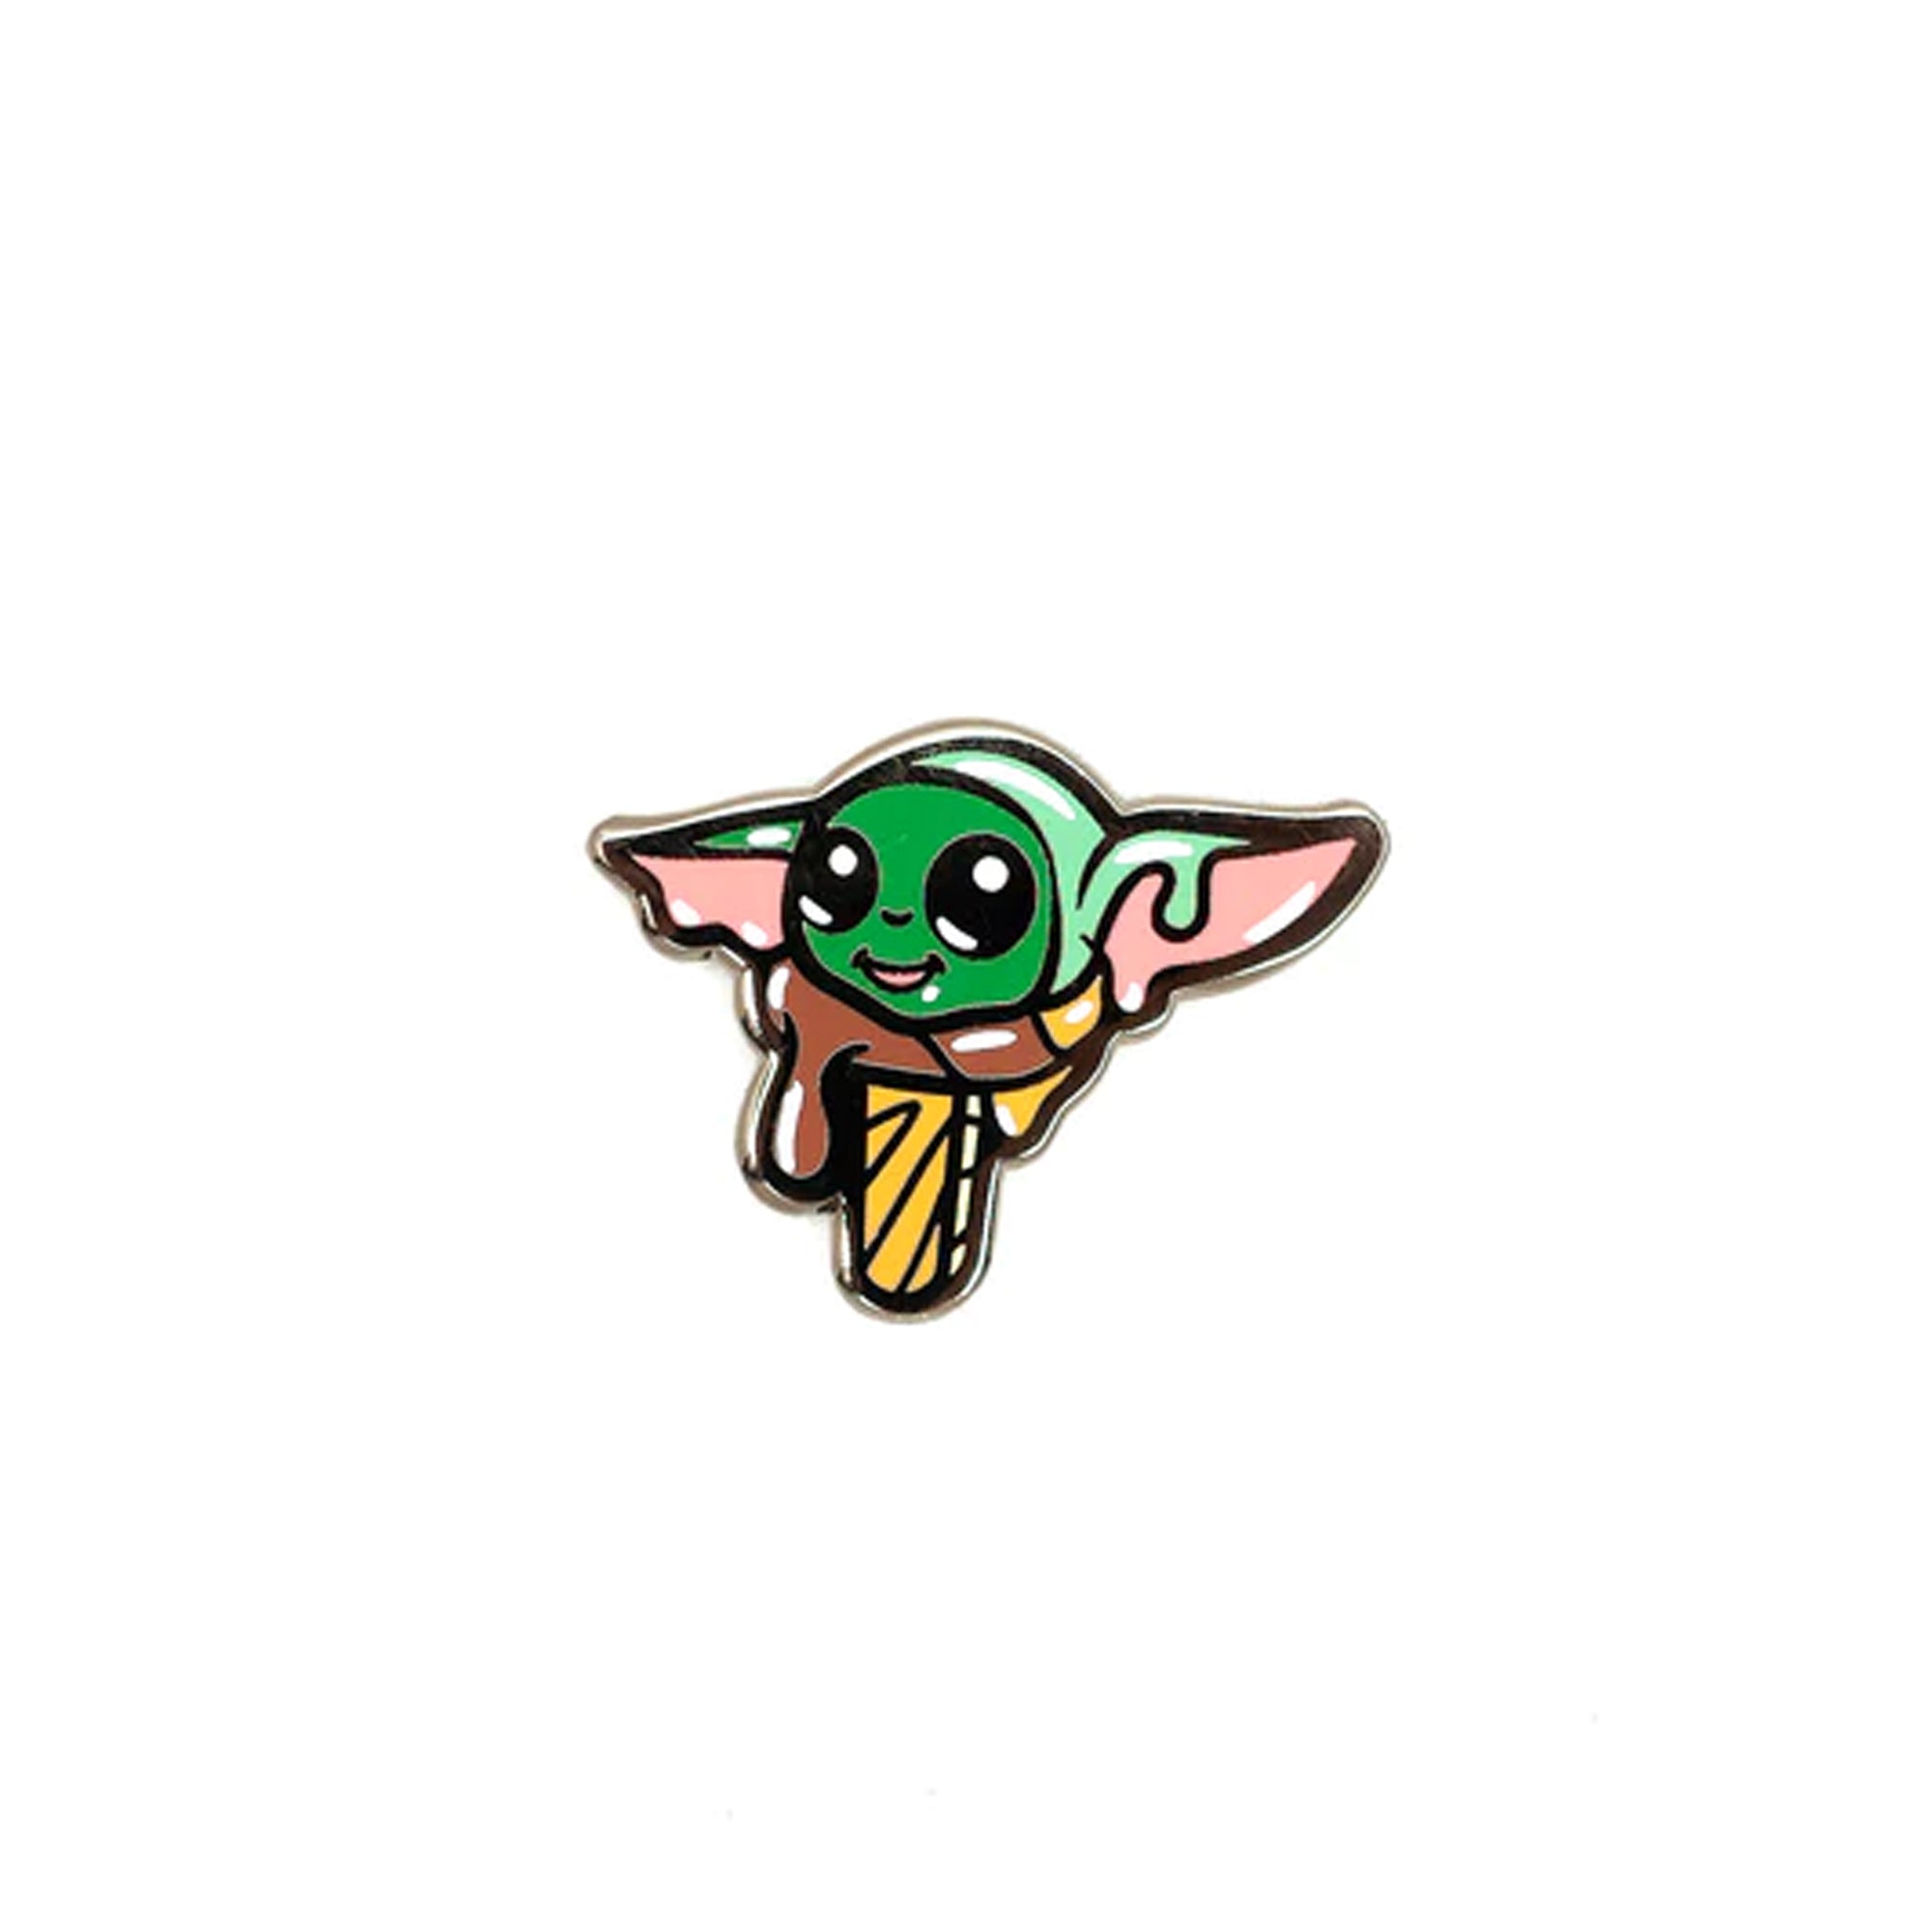 Hdqtrs Yoda Pop Pin